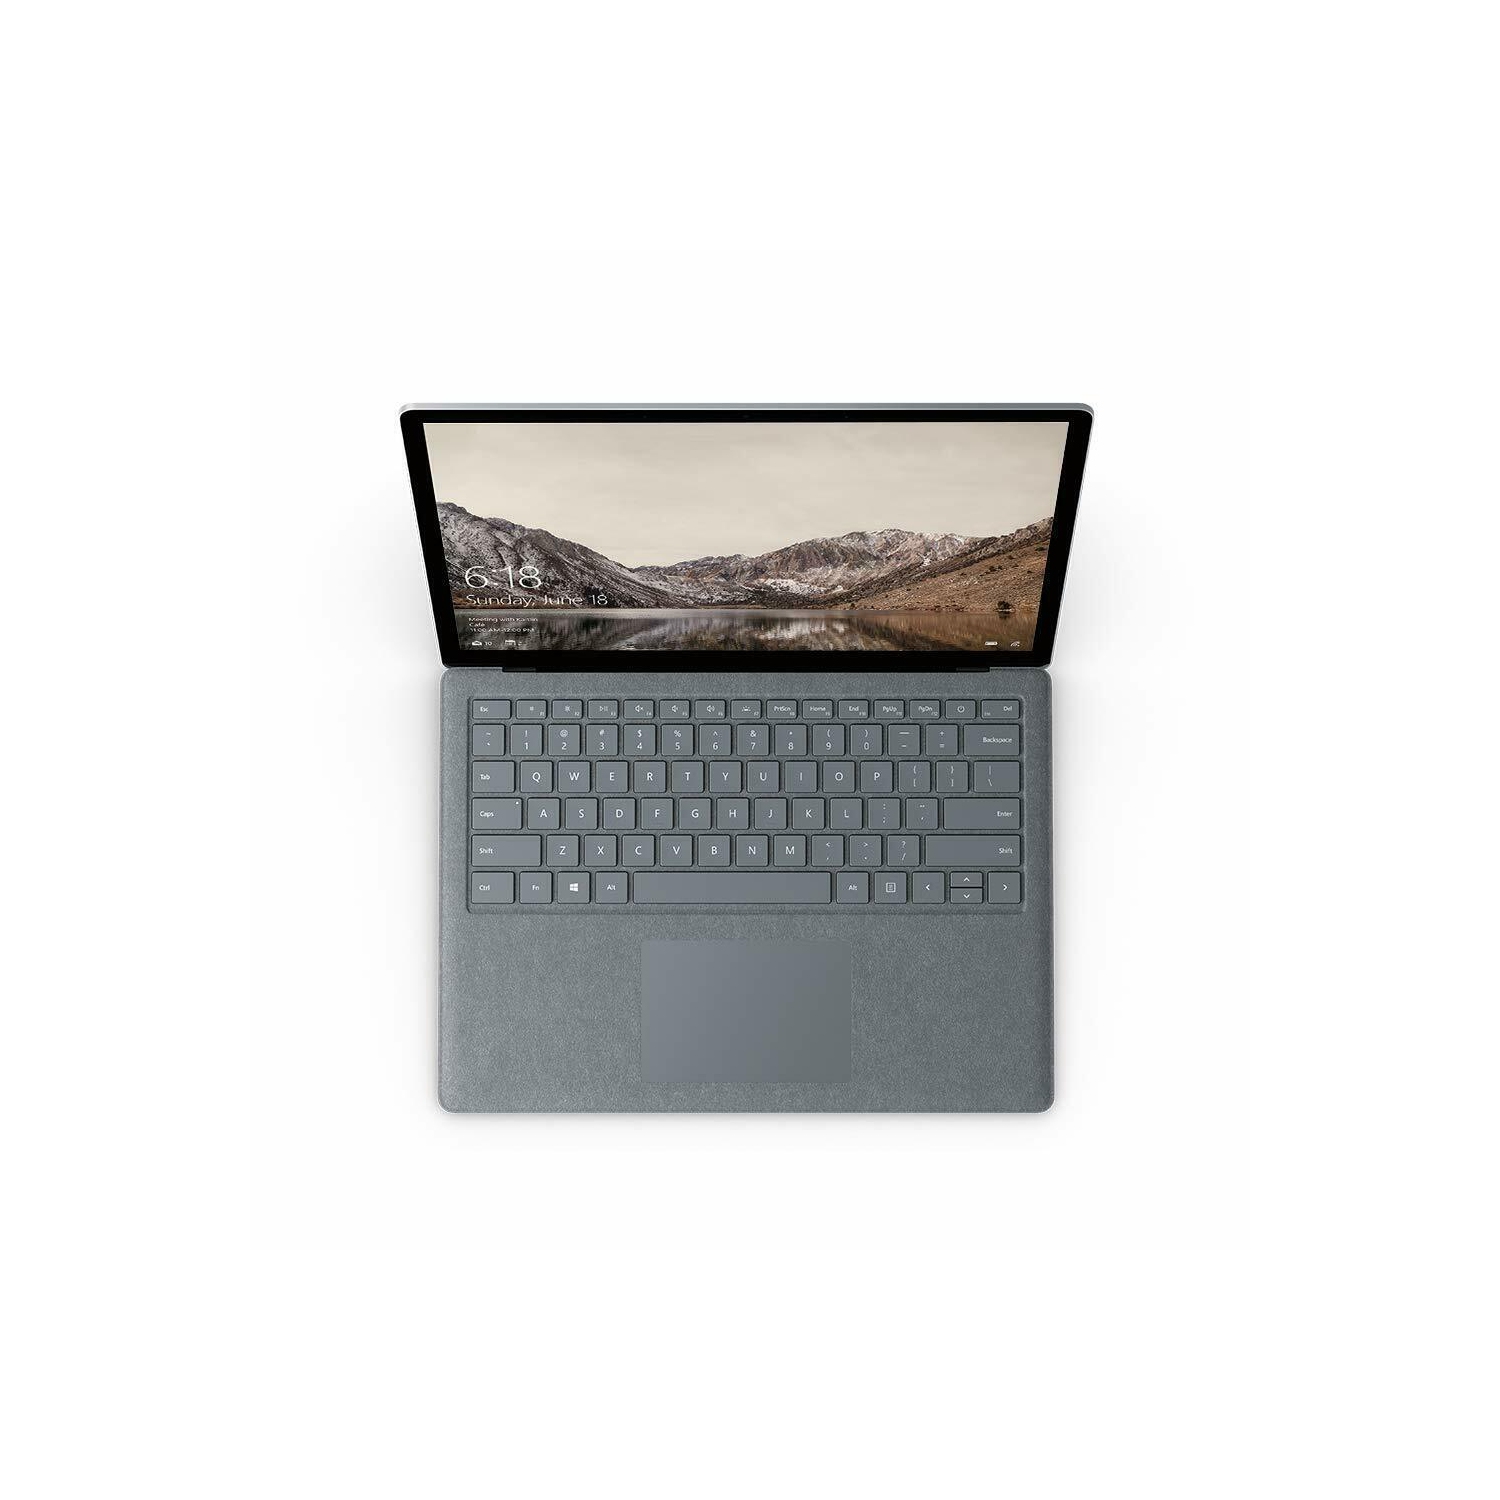 Refurbished (Good) - Microsoft Surface 13.5" Touch Screen Laptop, French Keyboard, Platinum Gray 1769, Intel Core i7-7660U 2.5GHz, 8GB RAM, 256GB SSD, Windows 10 Pro.